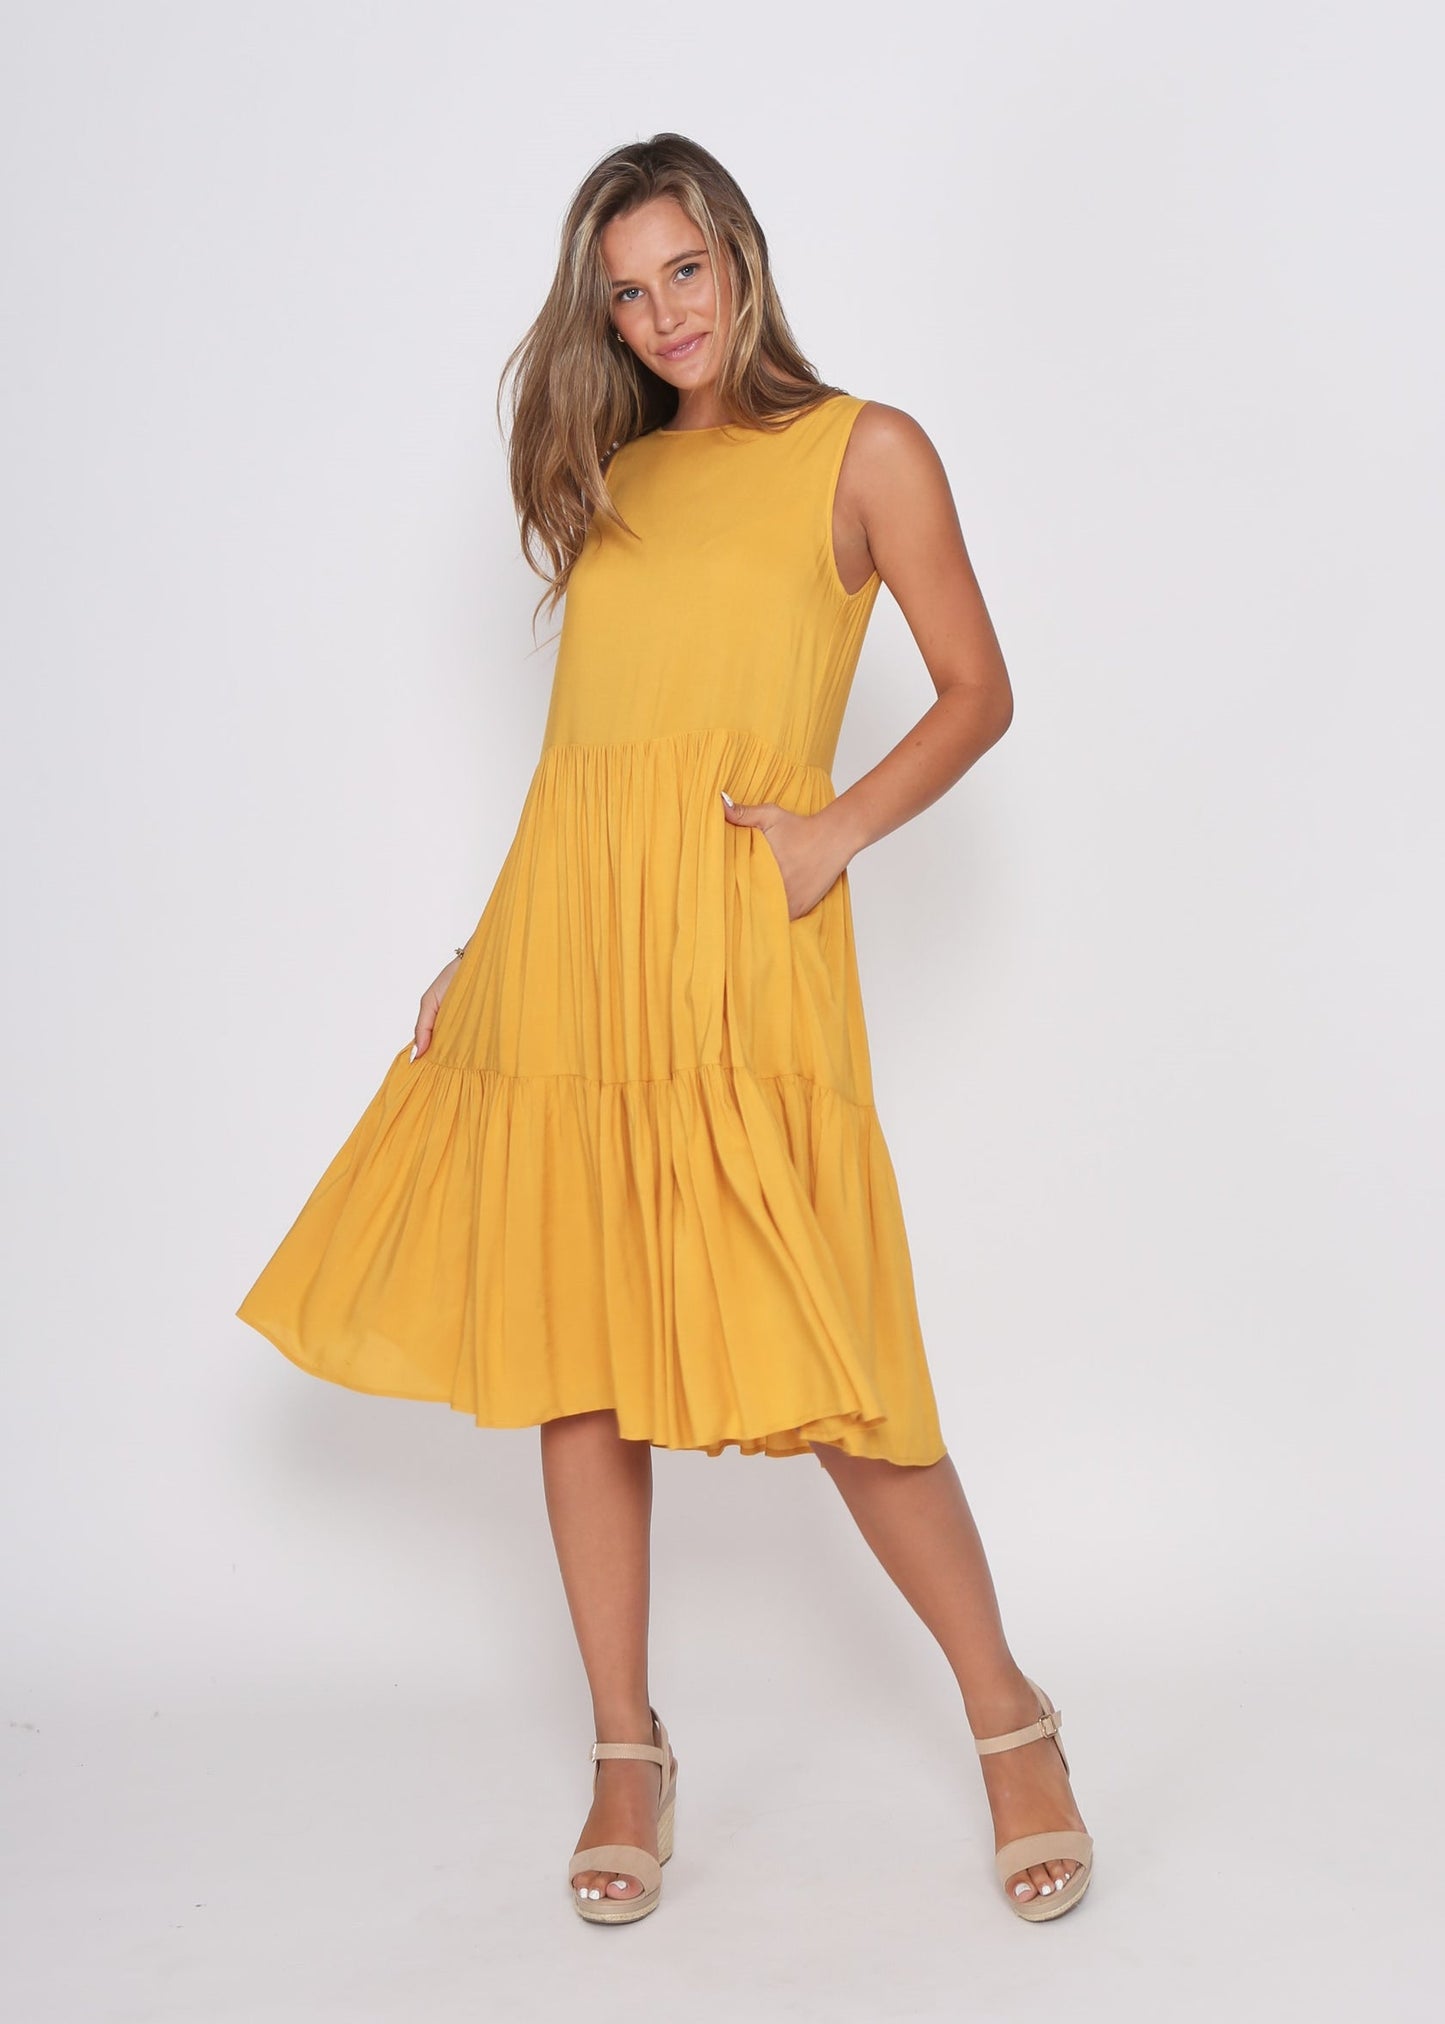 Mustard Dress fully Lined with side pockets. - sammi